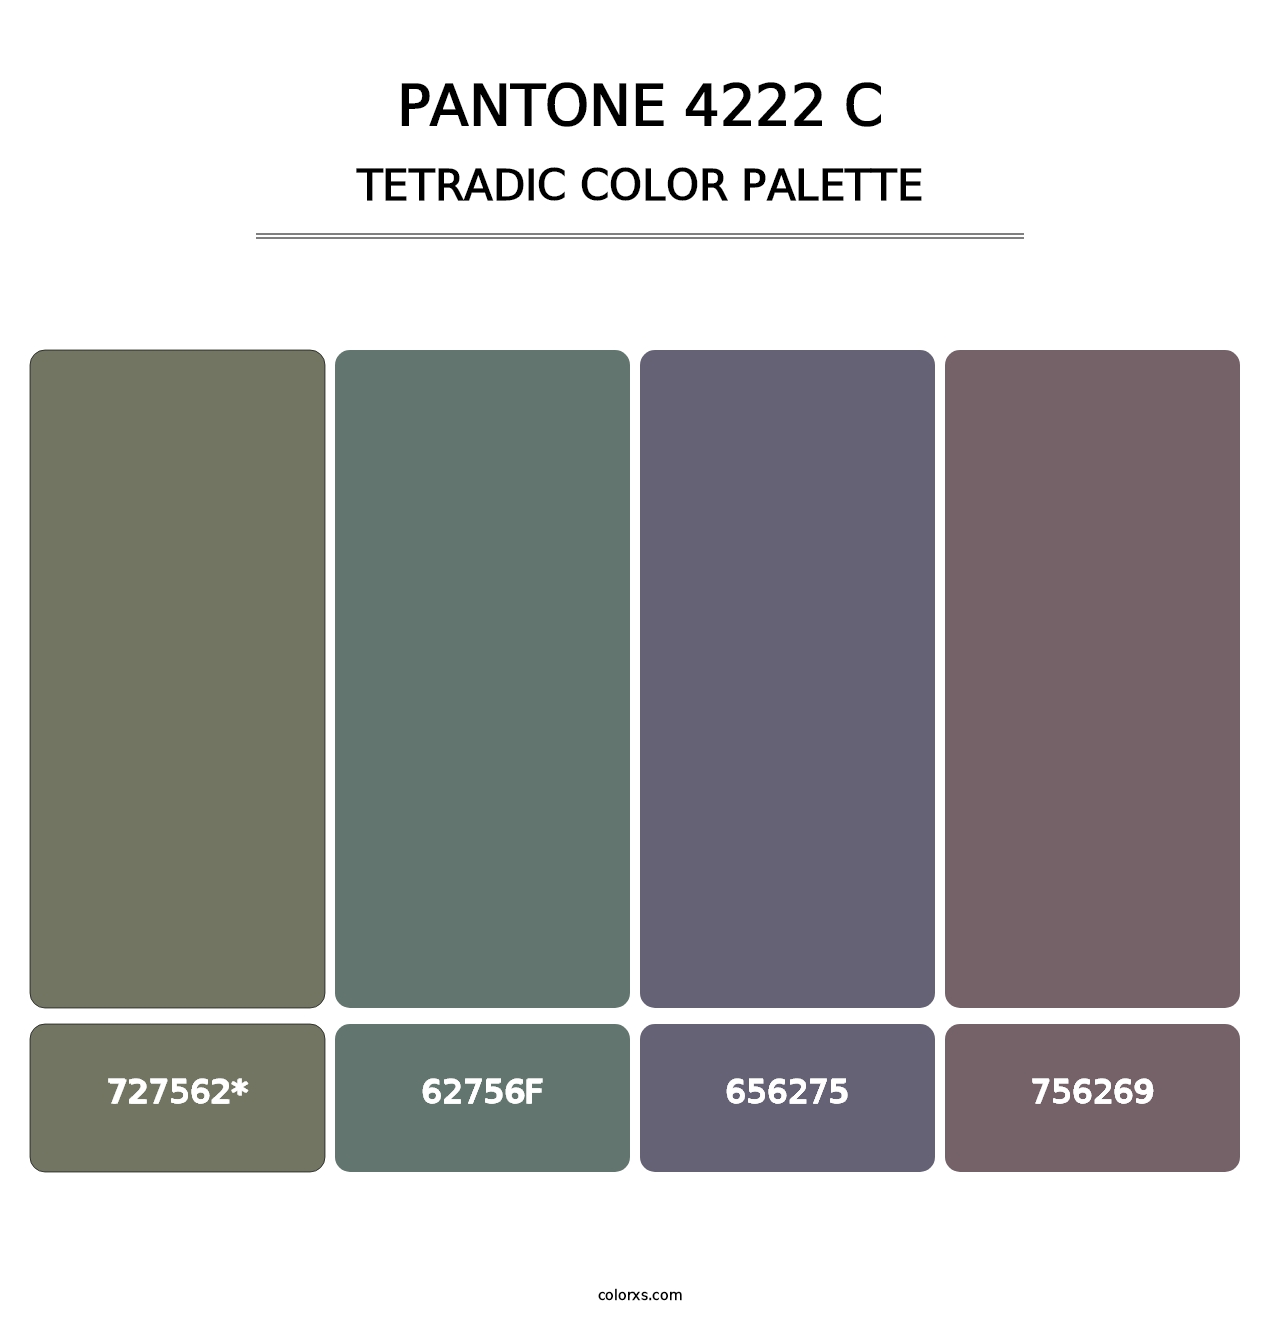 PANTONE 4222 C - Tetradic Color Palette